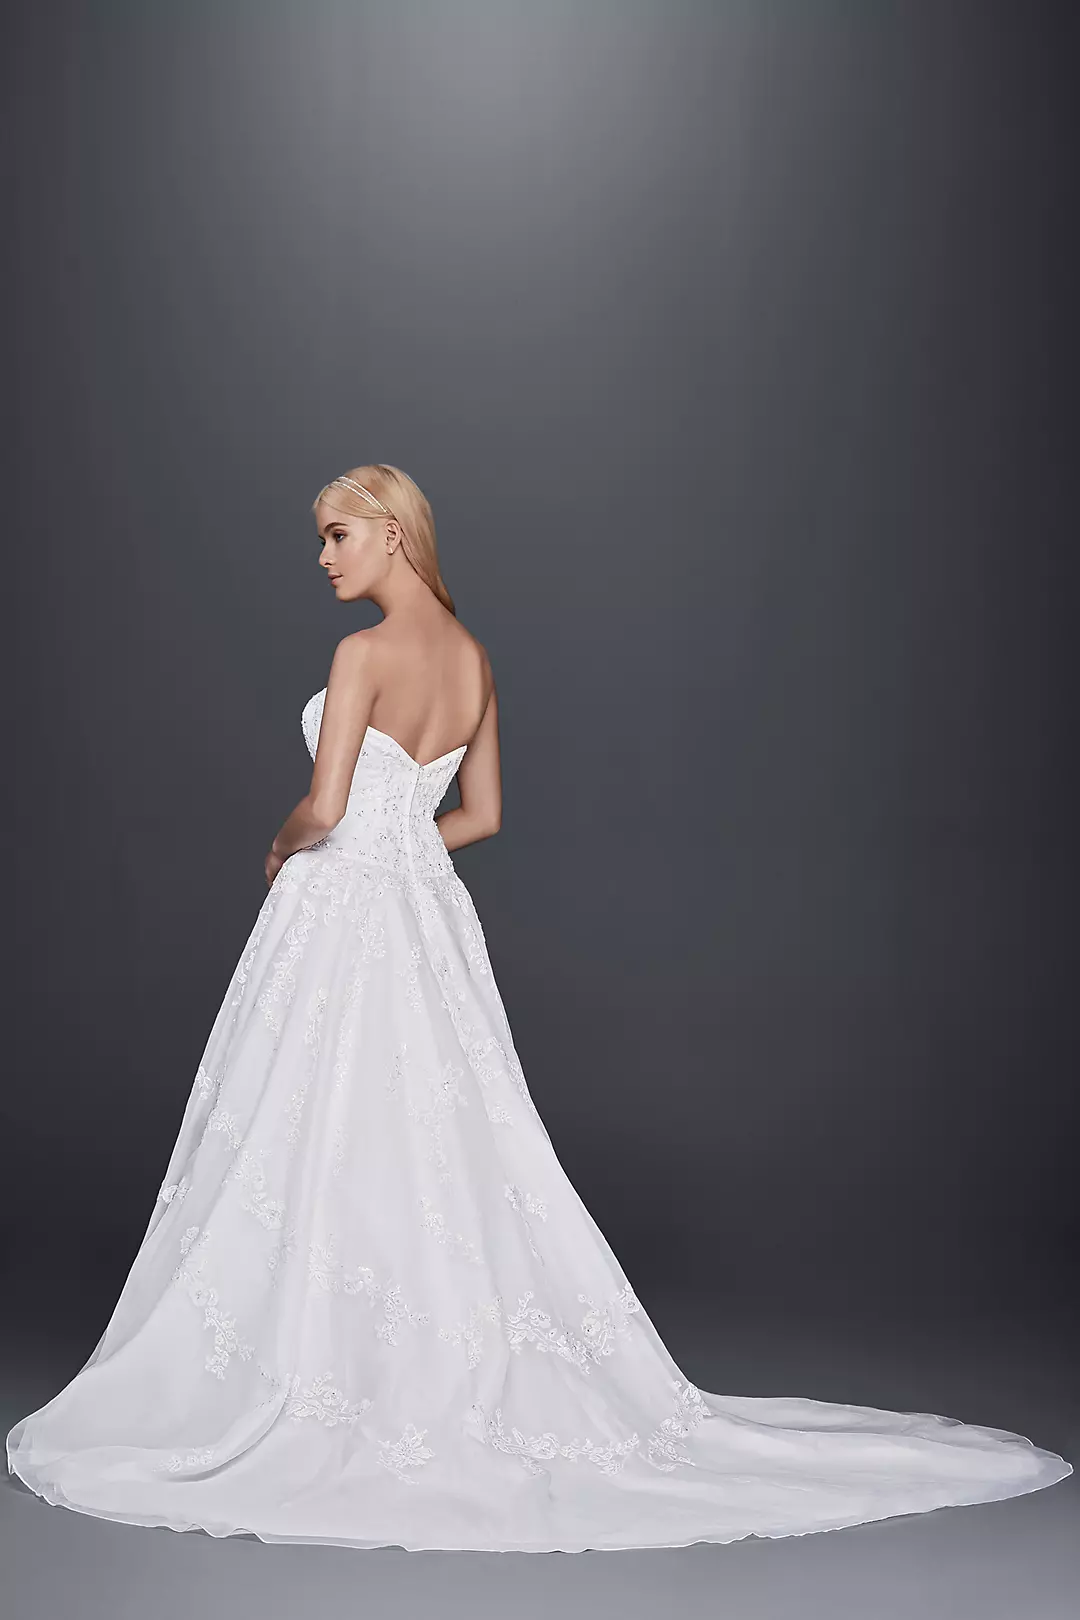 Strapless Lace Drop Waist Ball Gown Wedding Dress Image 2